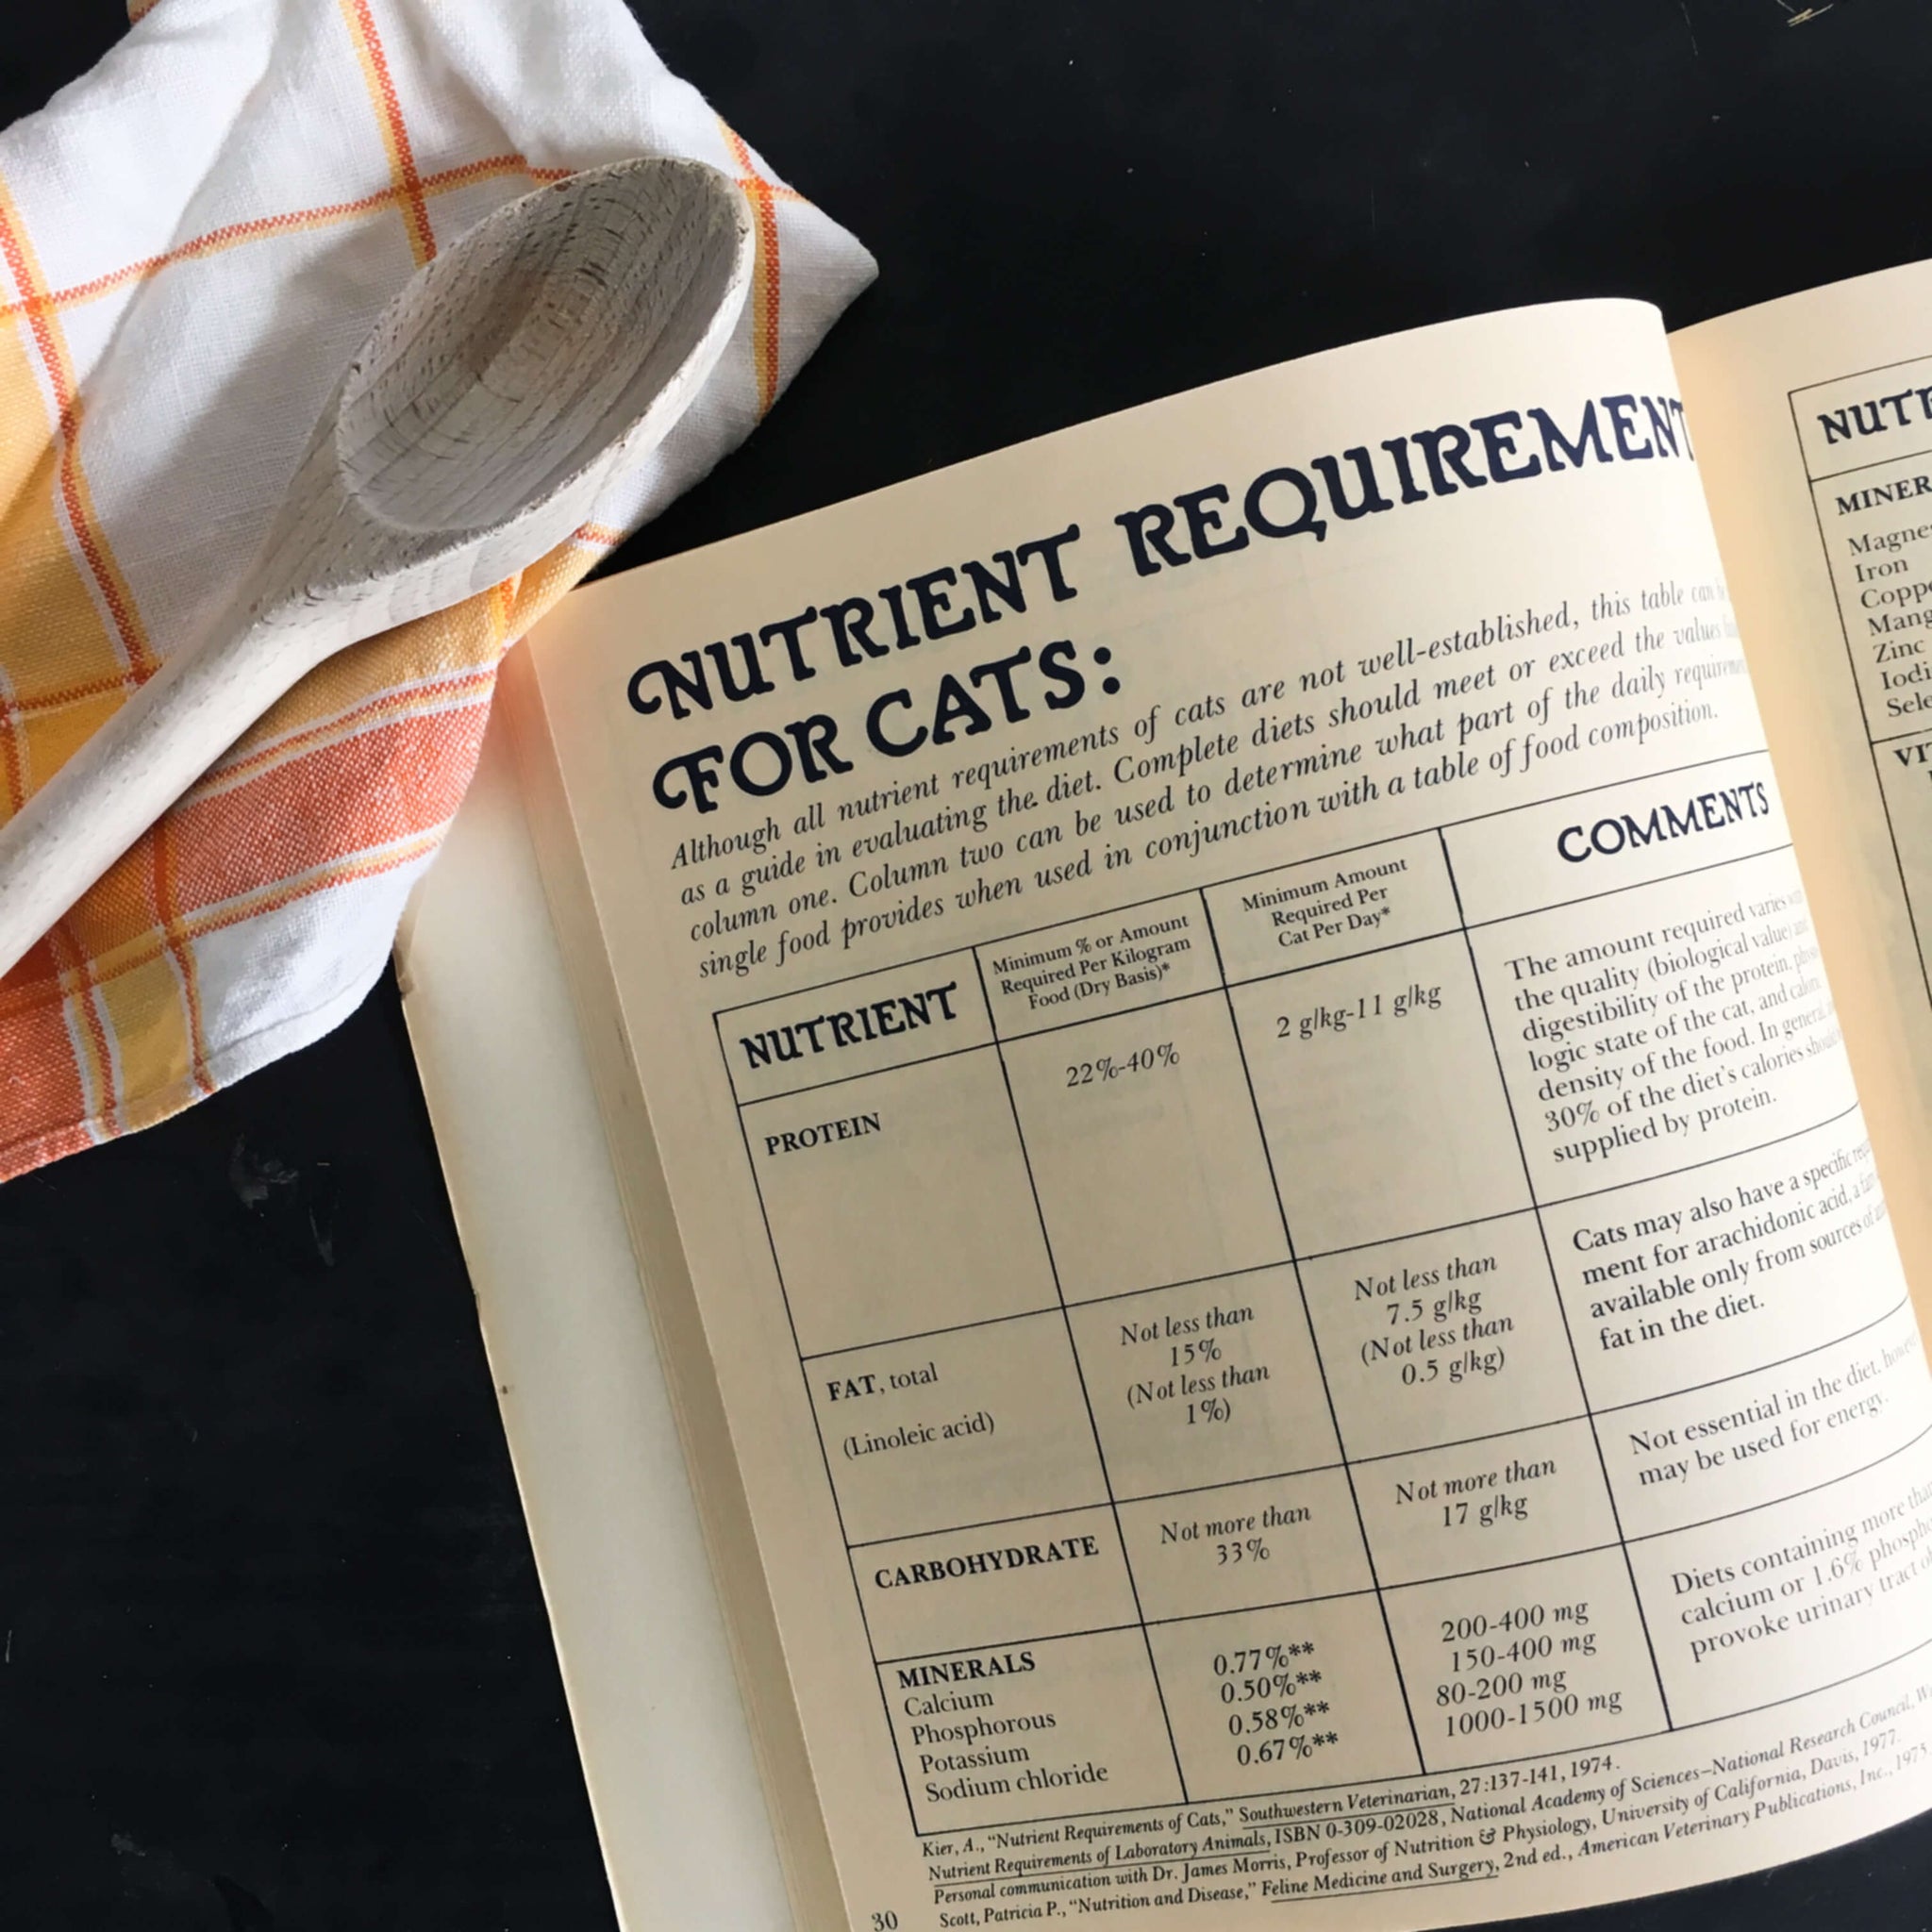 1970's Homemade Dog and Cat Food Cookbook - Dr. Terri McGinnis' Dog & Cat Good Food Book